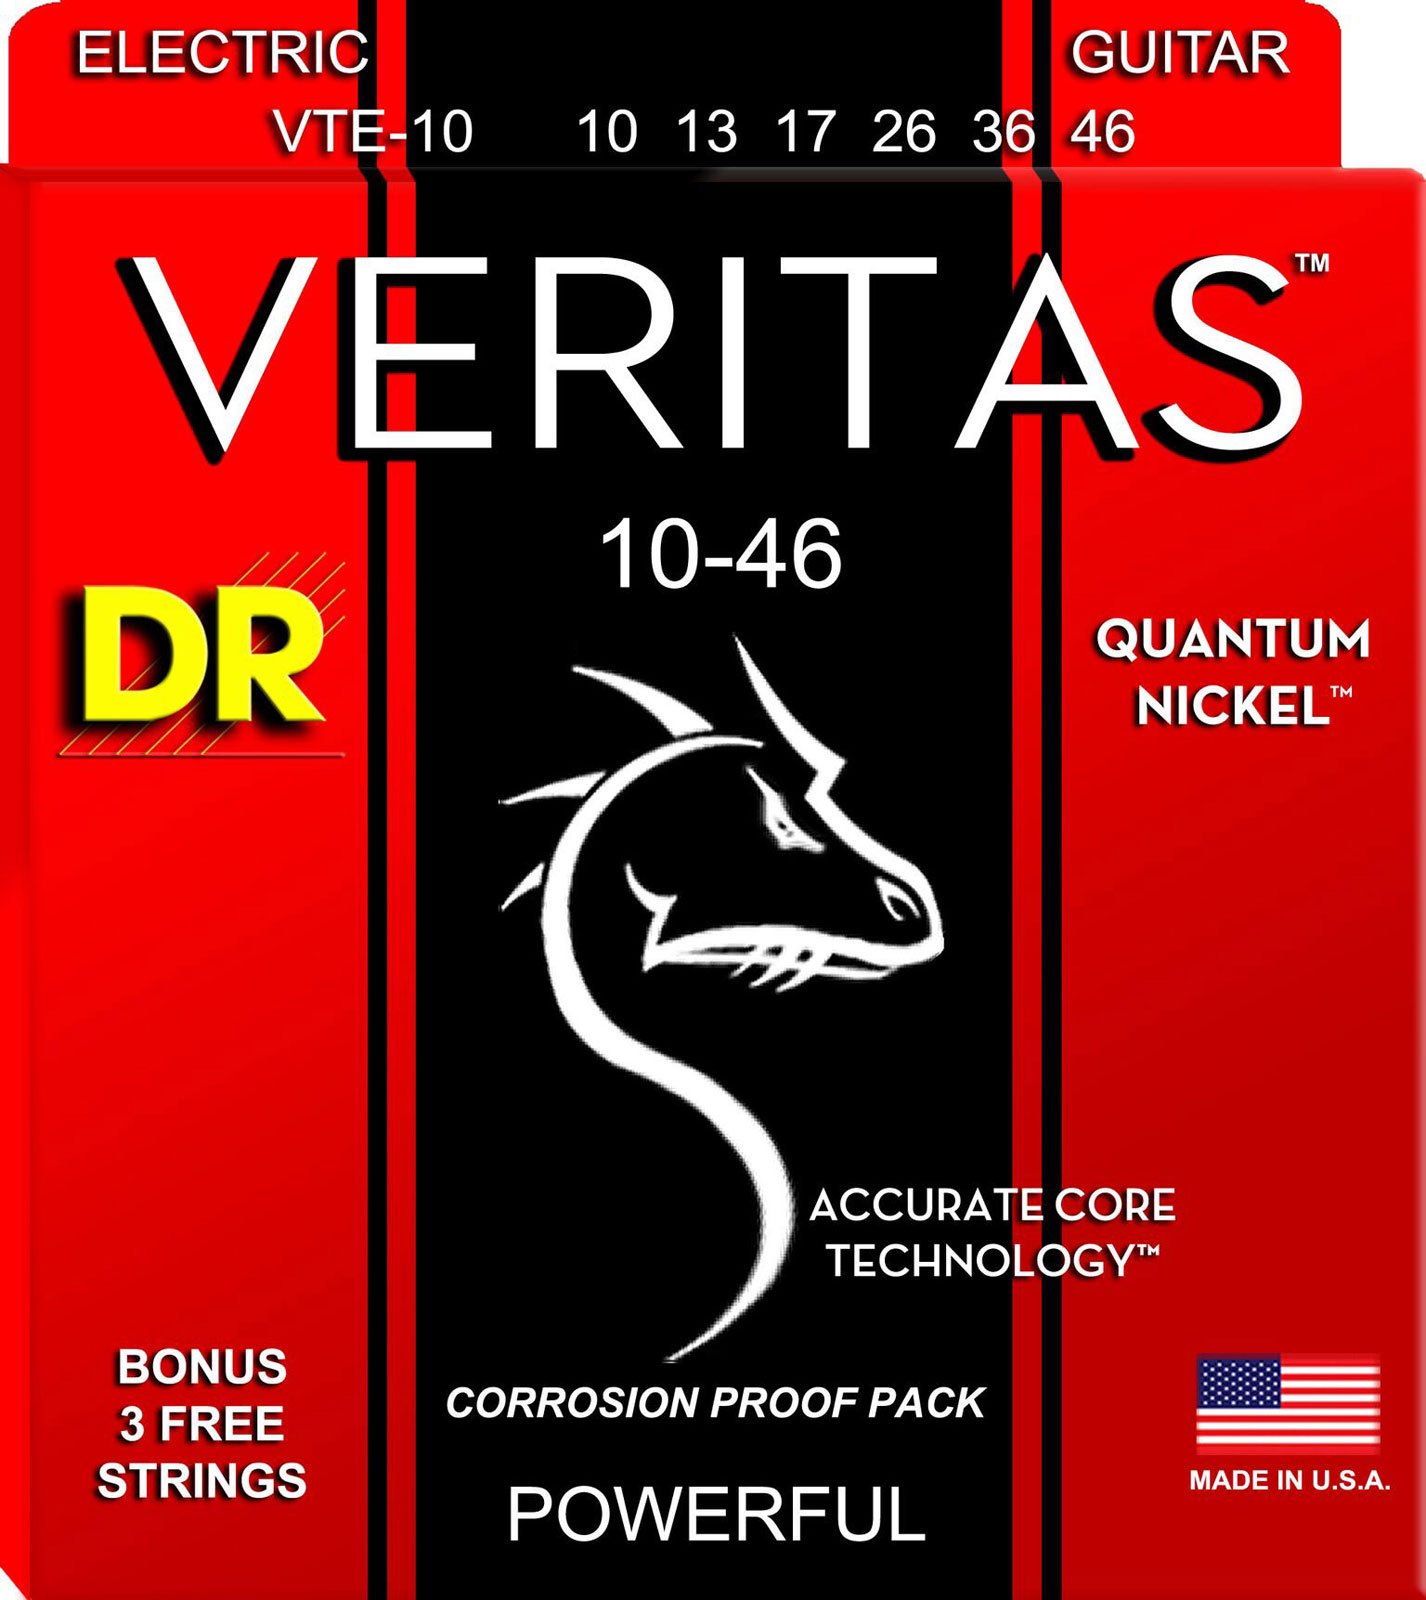 DR STRINGS VTE-10 VERITAS 10-46